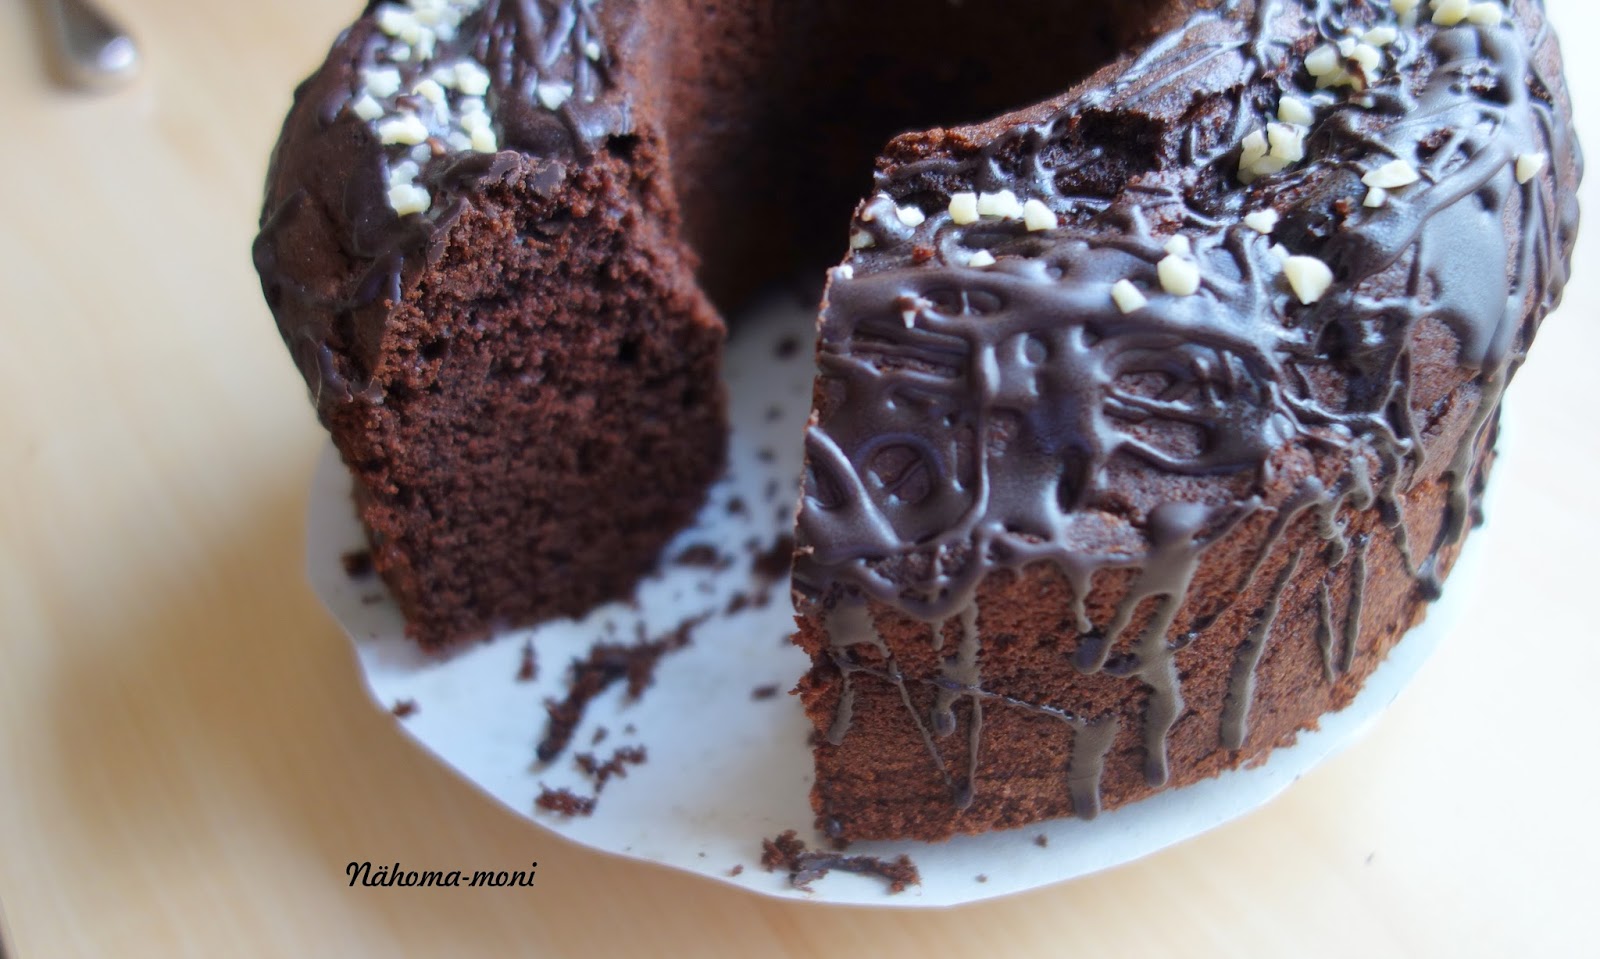 Naehoma - moni: Schokoladenkuchen